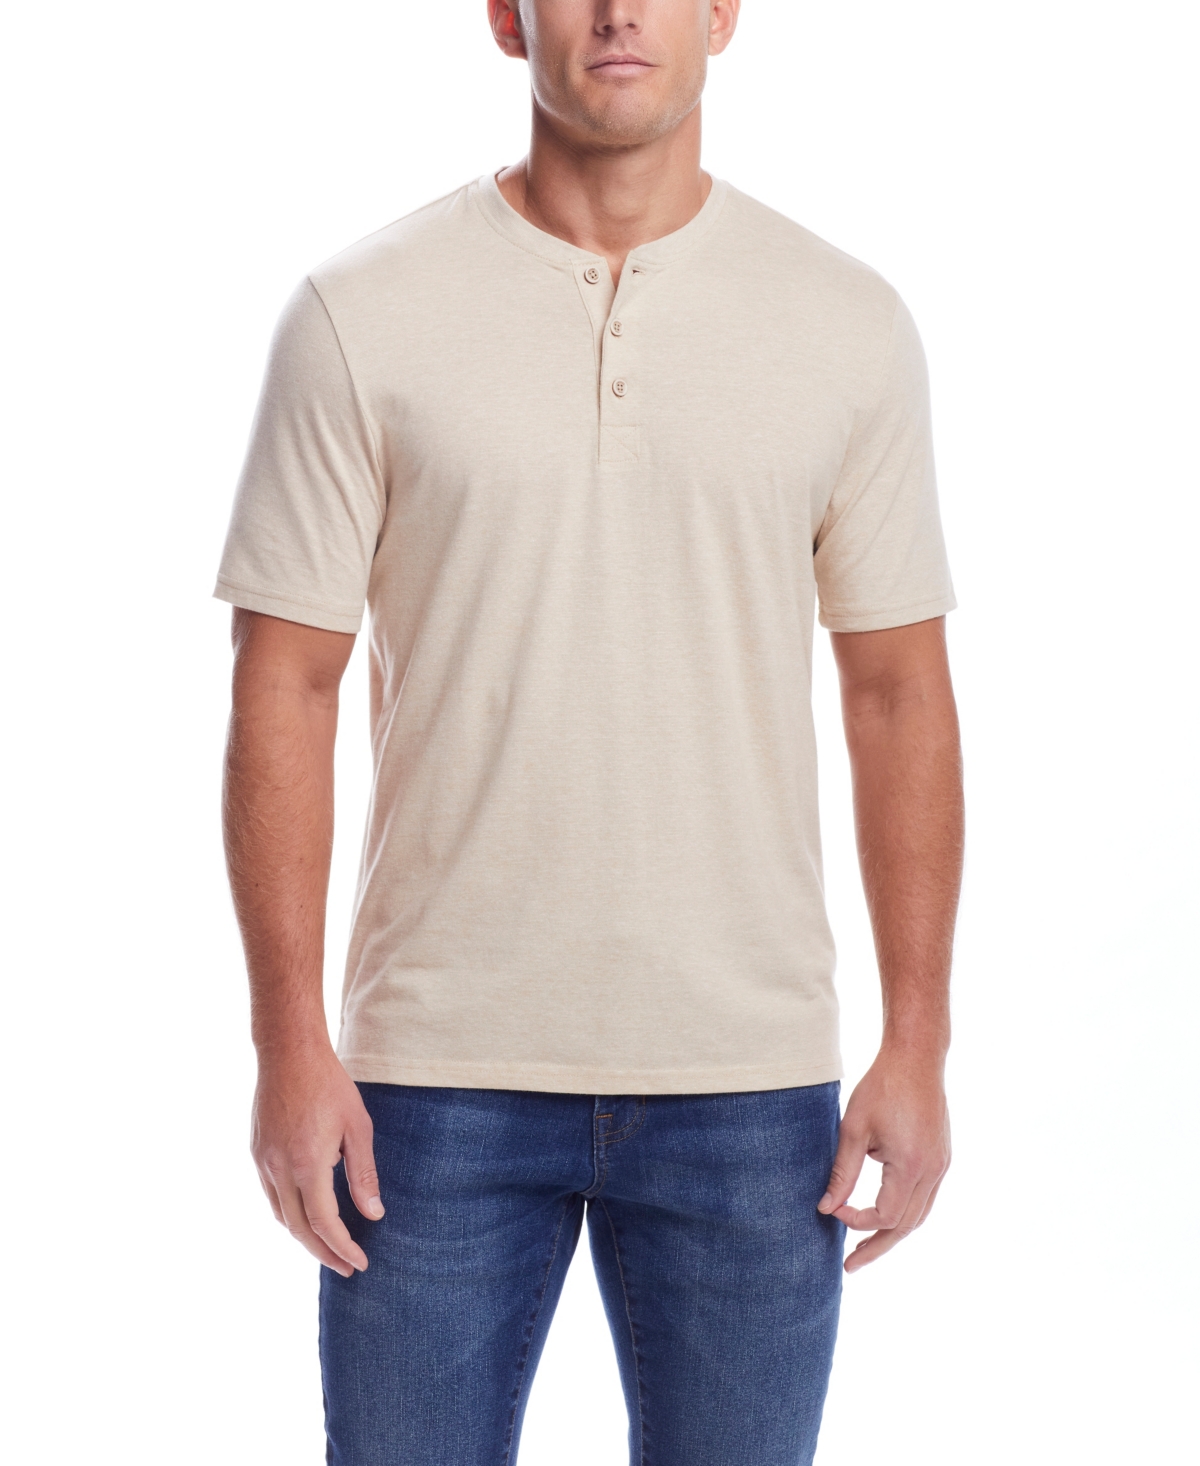 Men's Short Sleeve Sueded Microstripe Henley Shirt - Natural